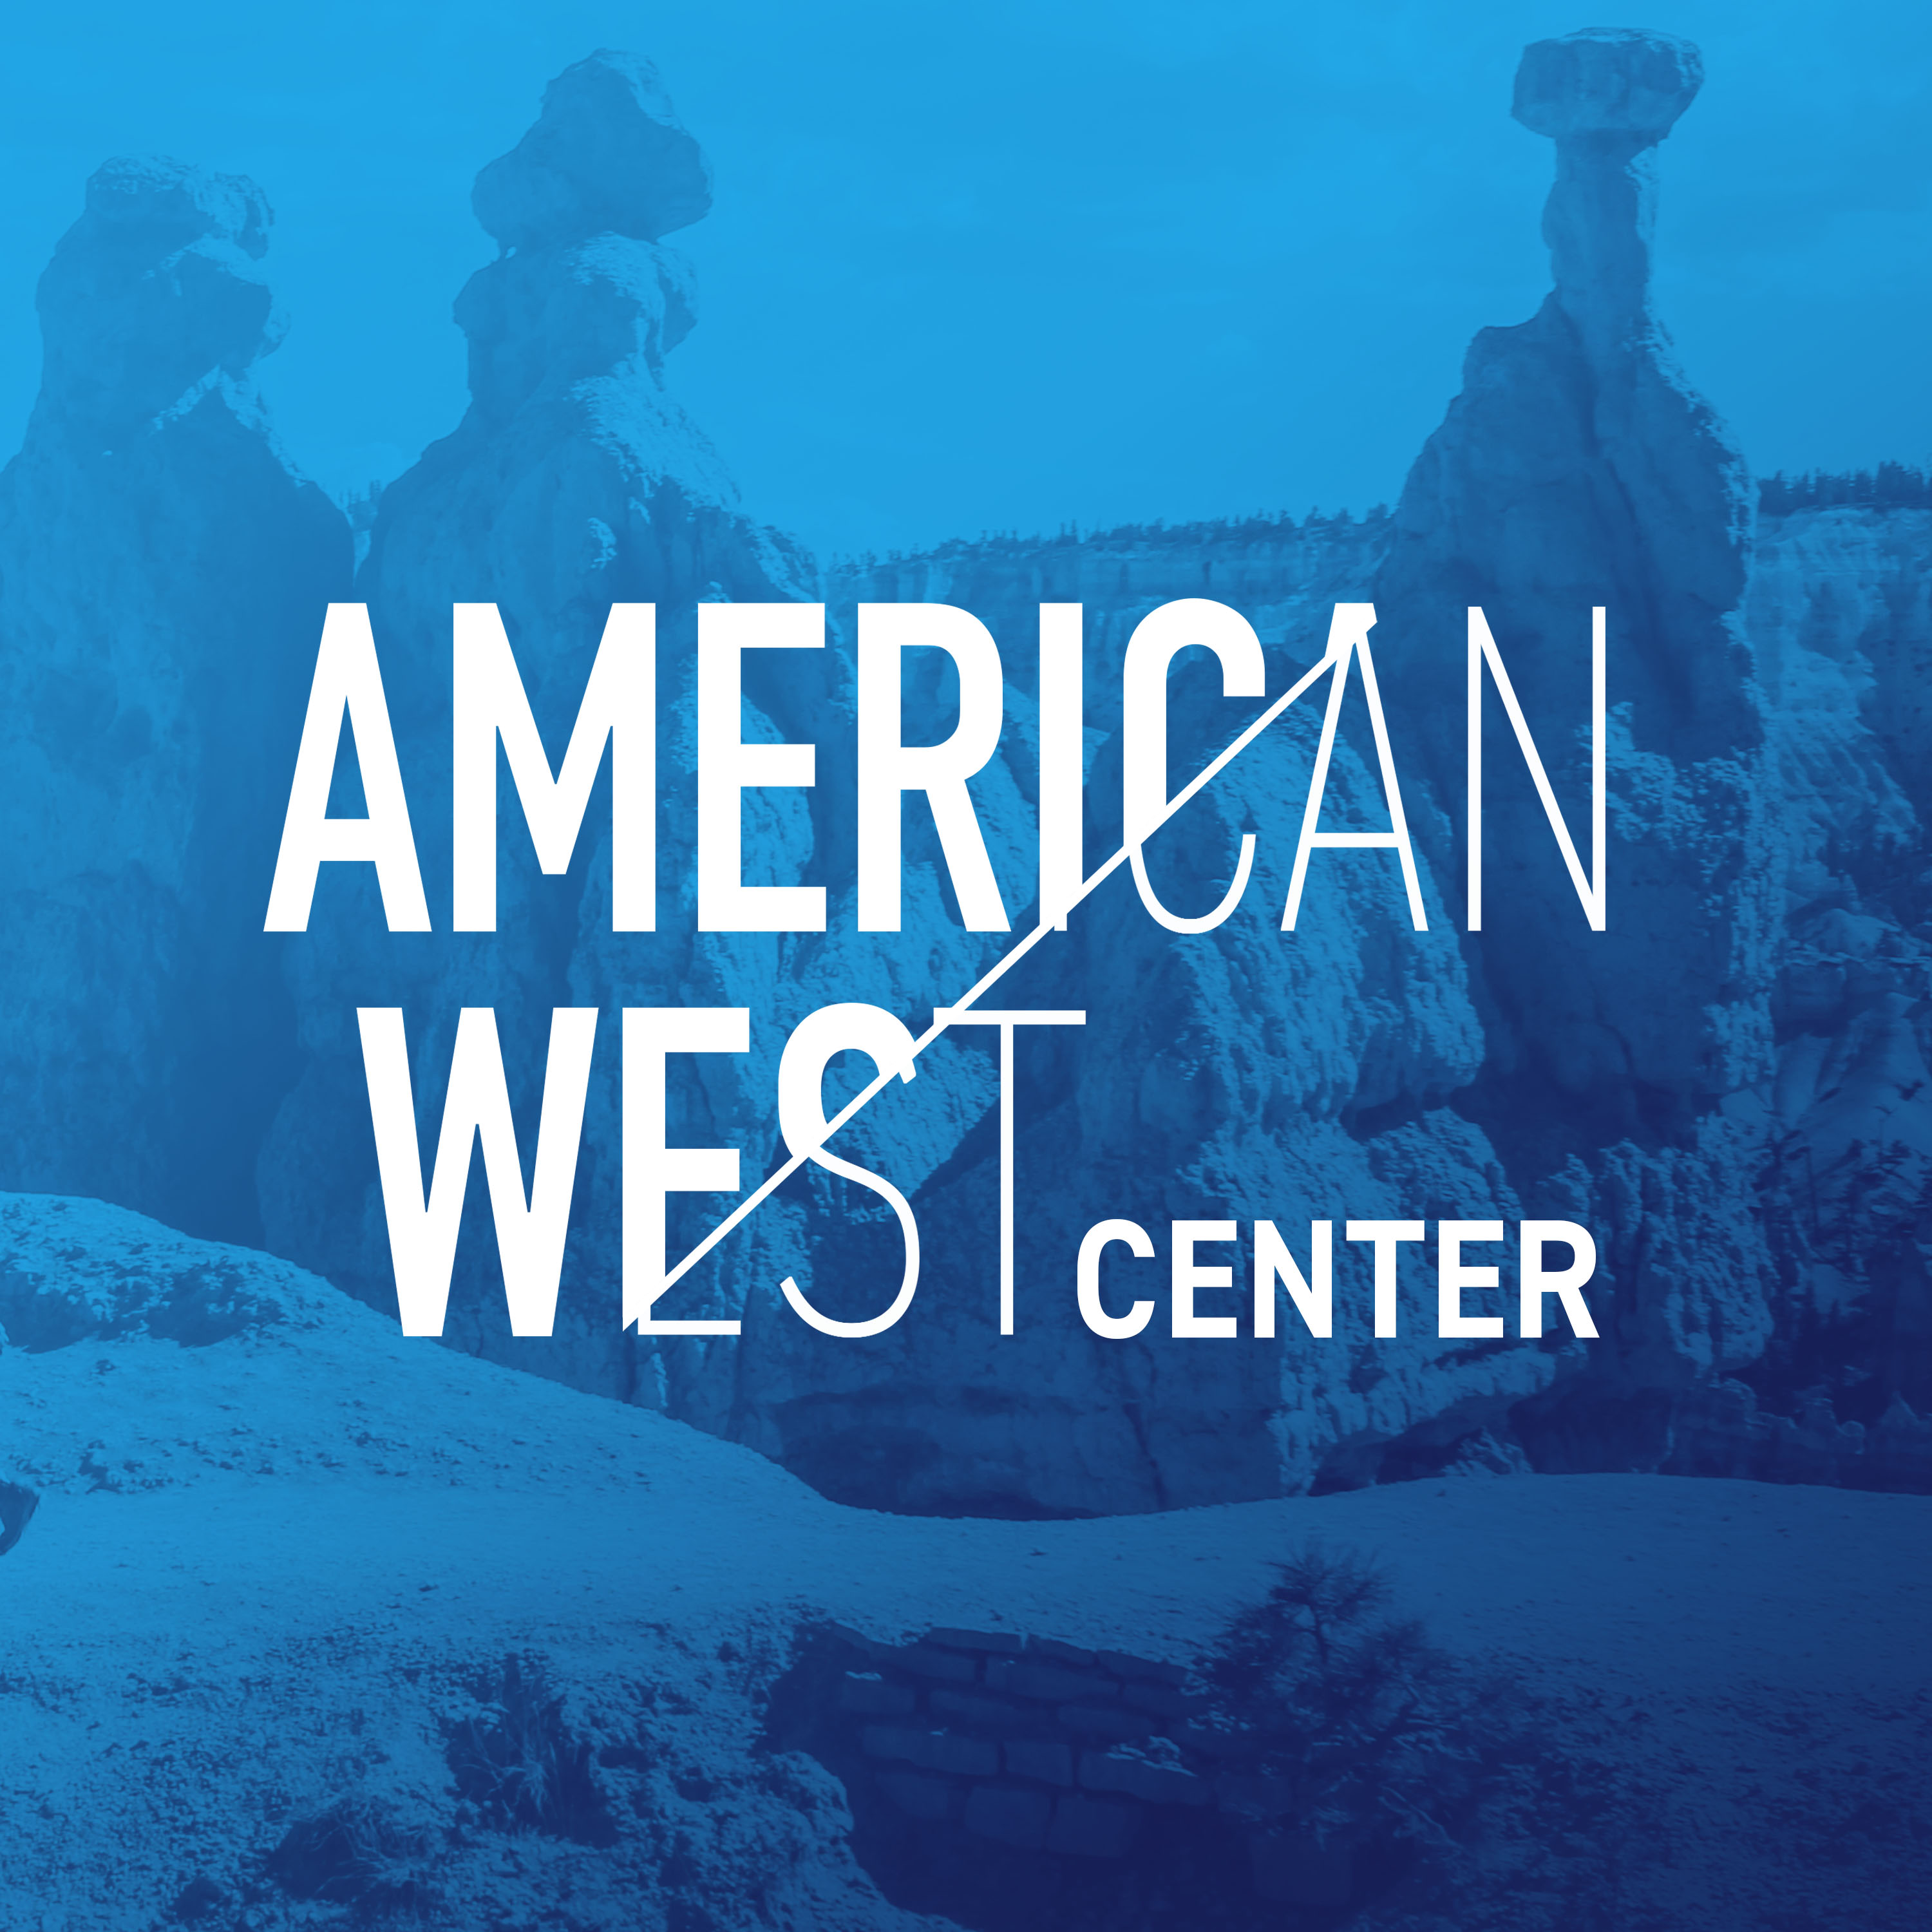 American West Center